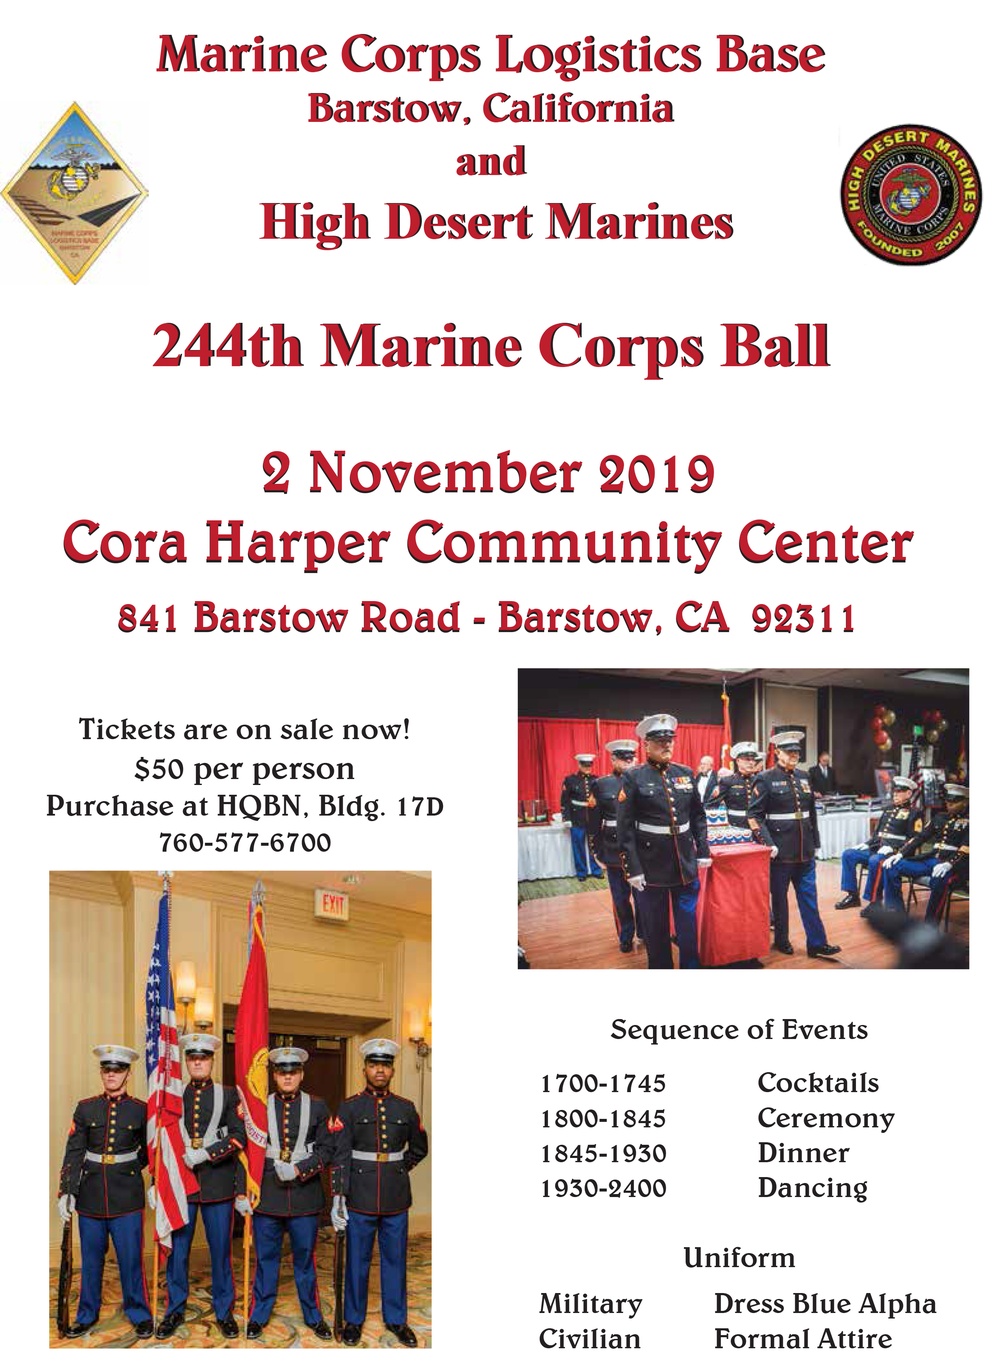 MCLB Barstow 244th Marine Corps Ball